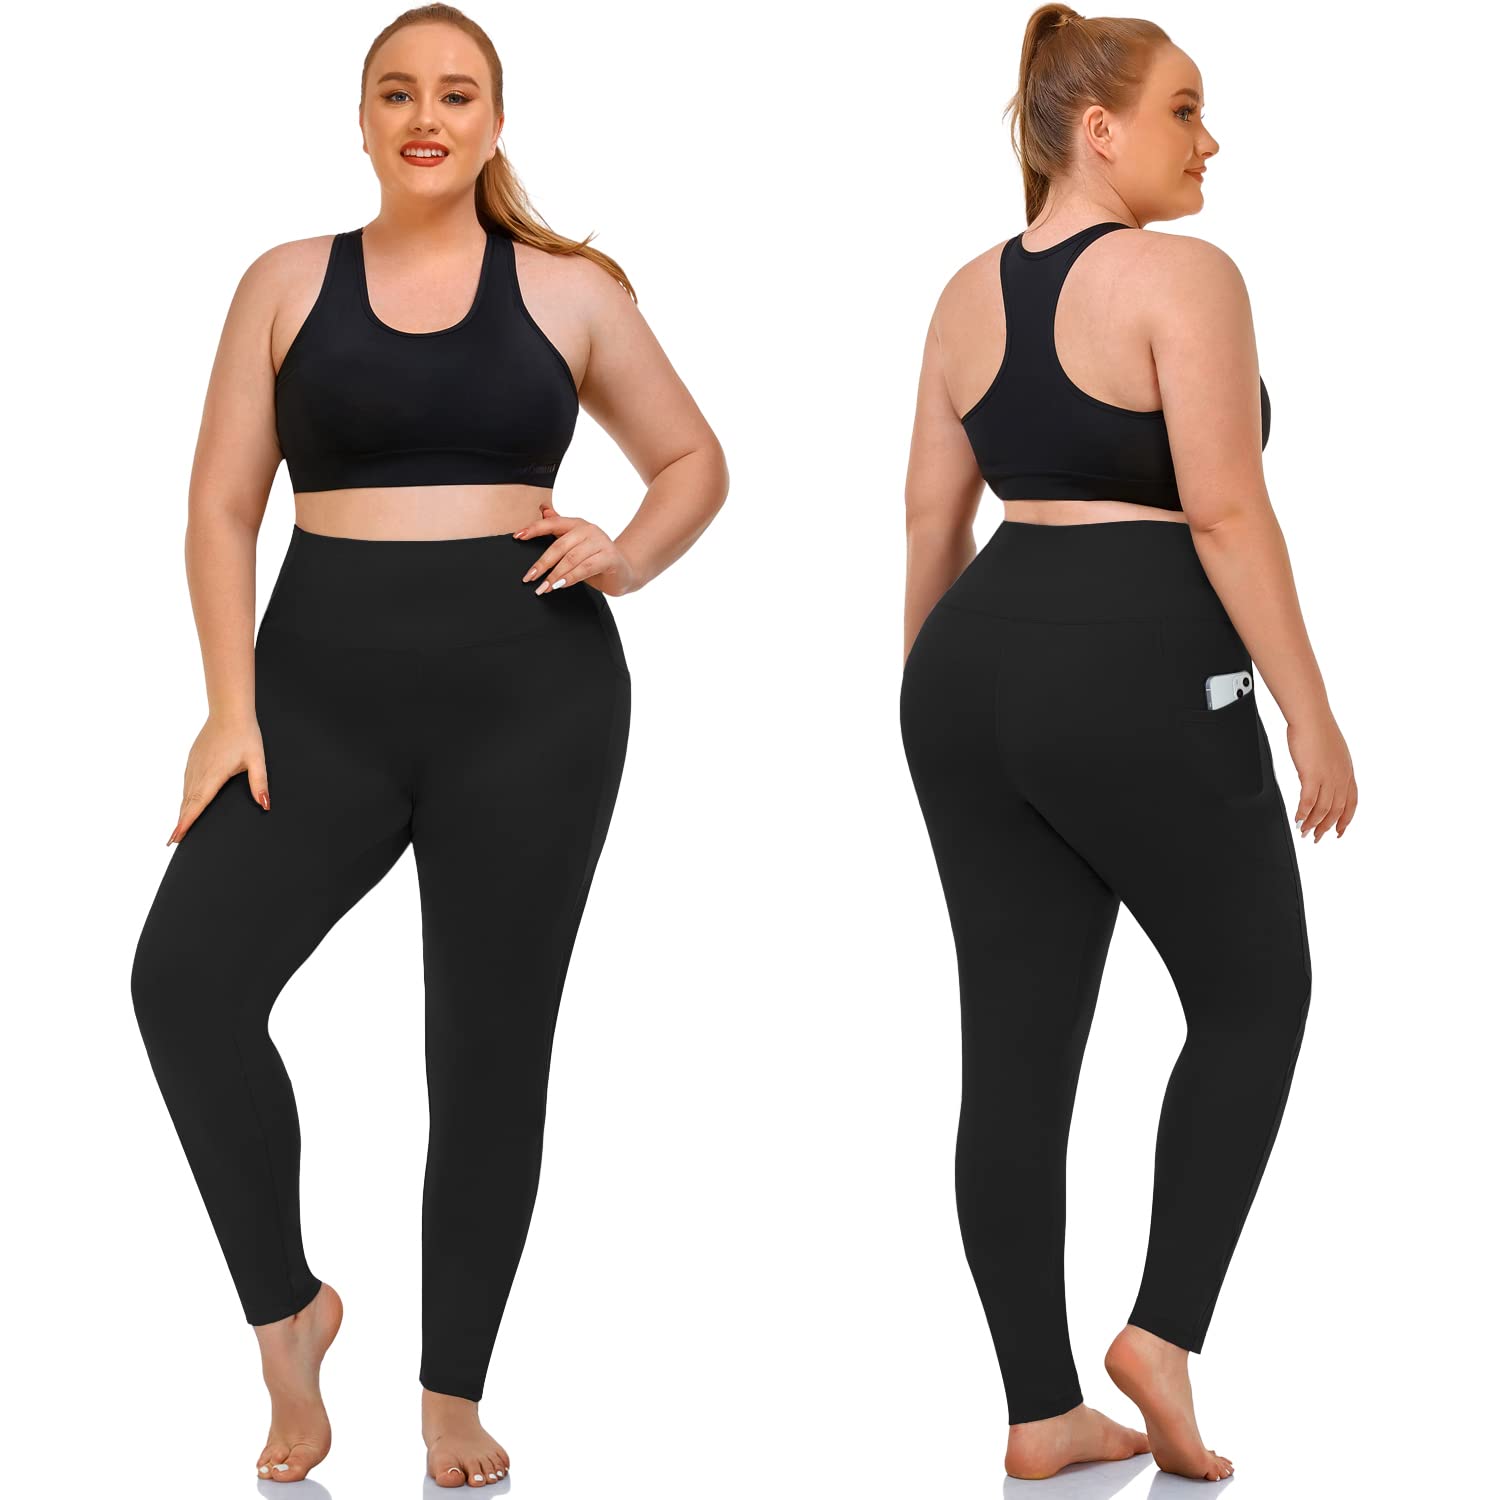 Plus size leggings for women – How to Choose the Right Leggings插图4